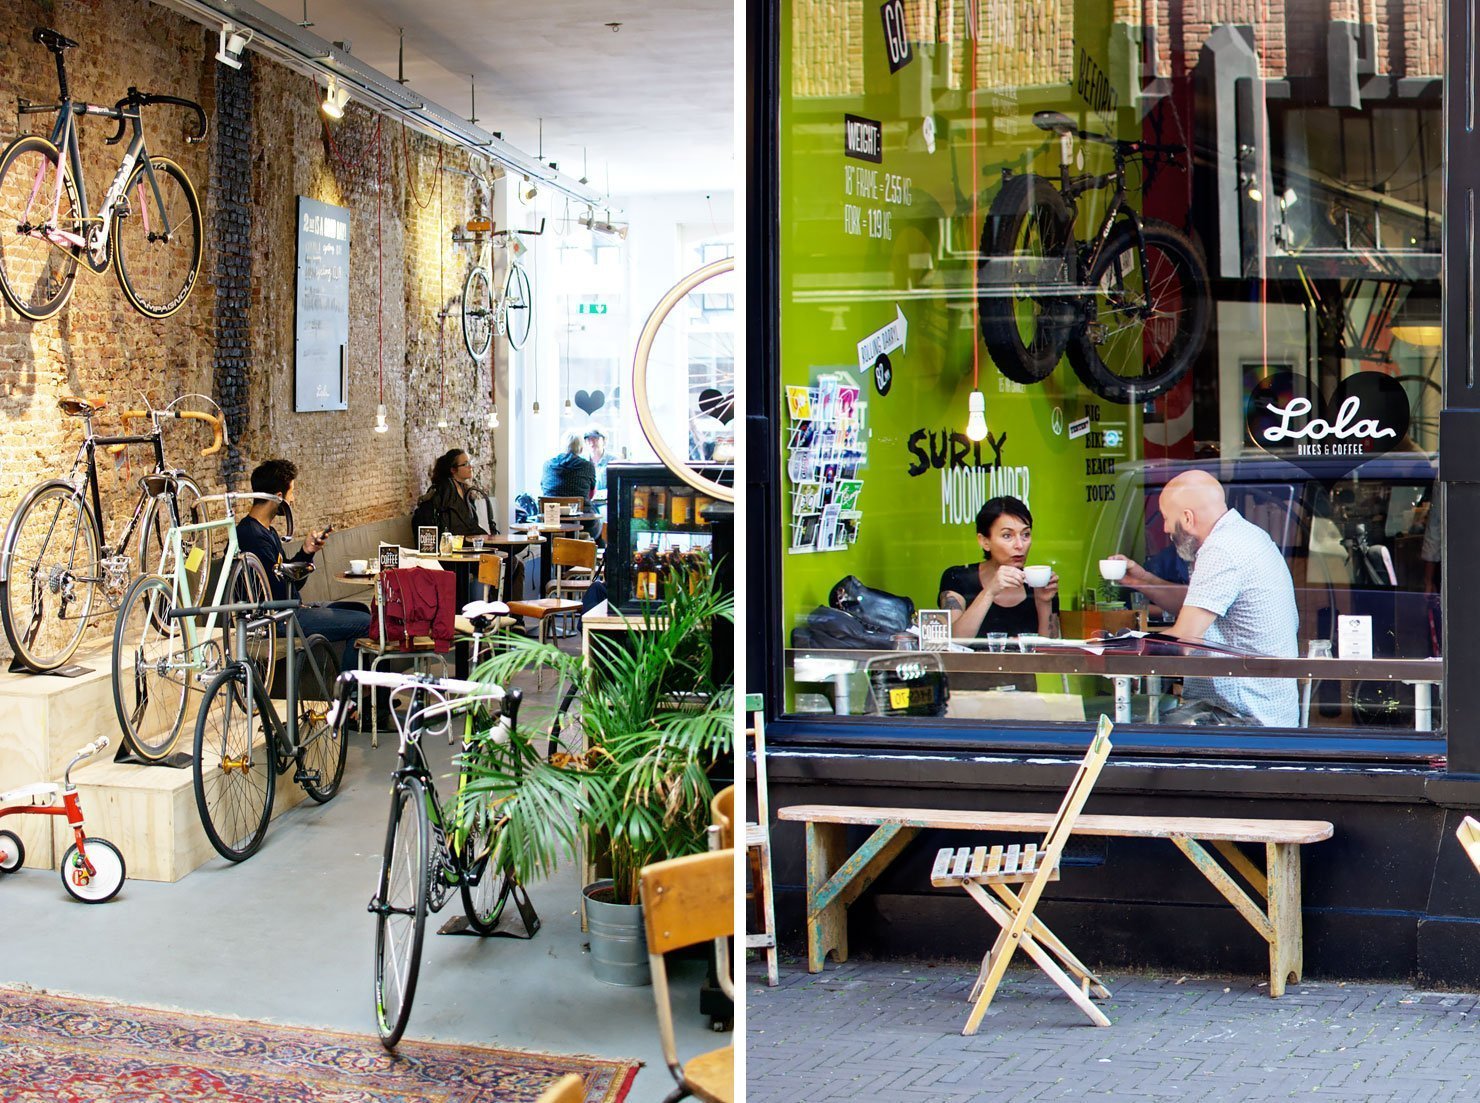 Coffee hotspot in Den Haag: Lola Bikes and Coffee on the Noordeinde